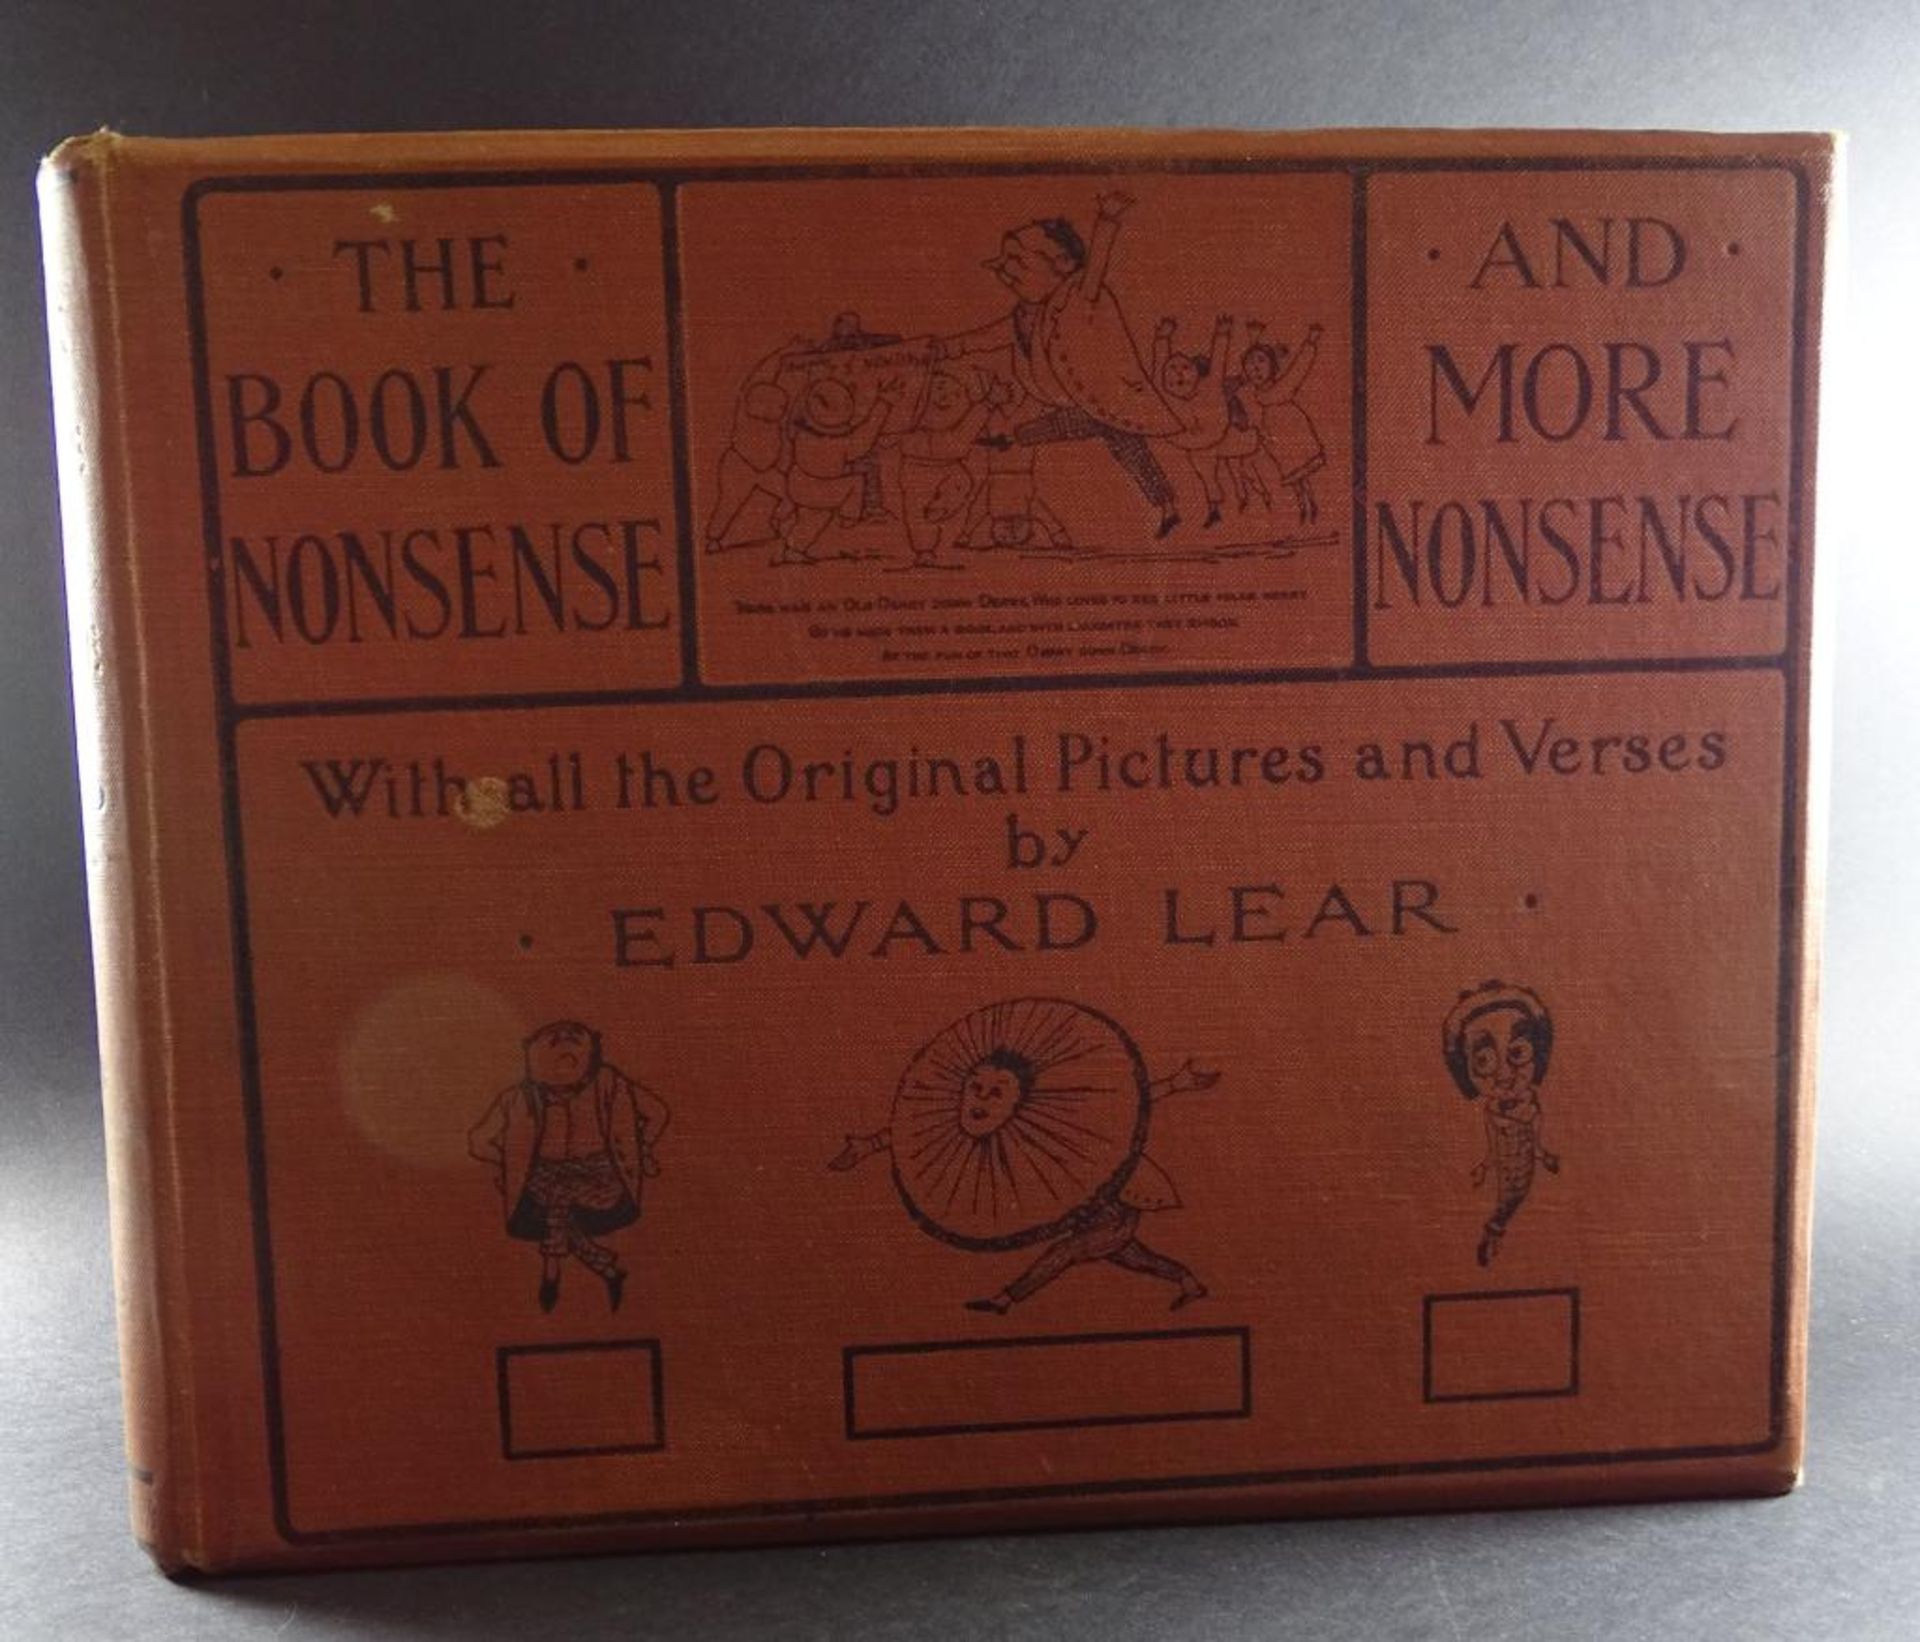 "The Book of Nonsense", Edward Lear